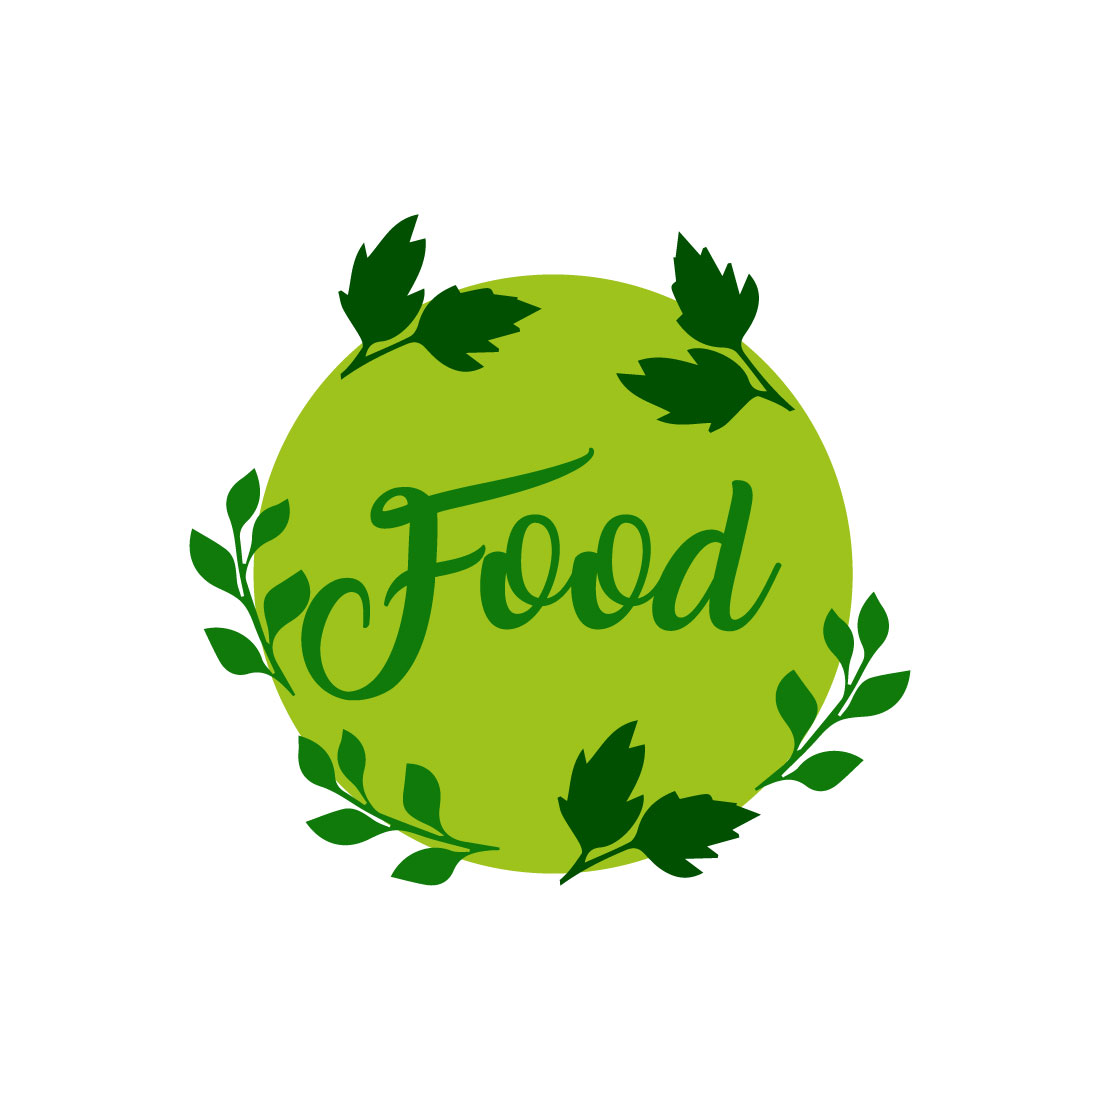 Free Farm-to-table logo preview image.